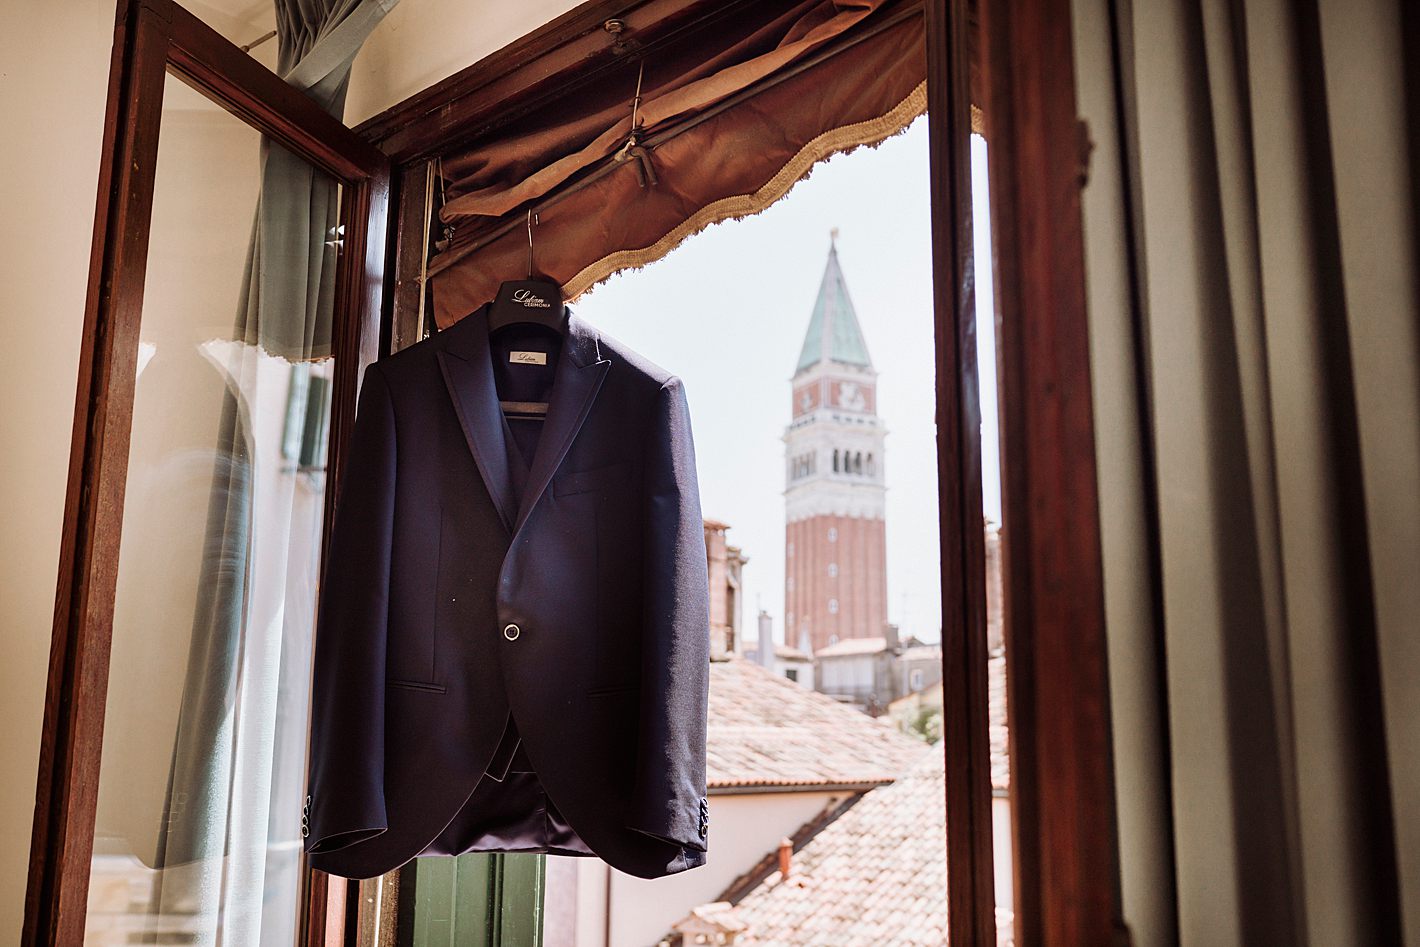 matrimonio elegante a venezia